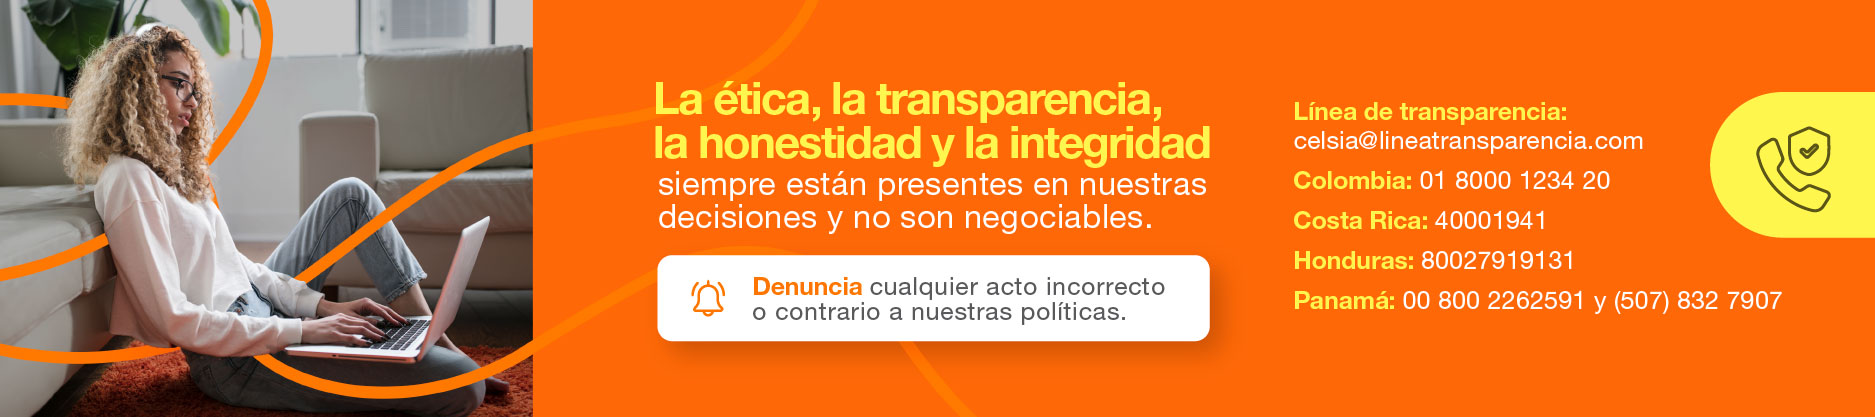 Banner-web-transparencias-politicas-1.jpg